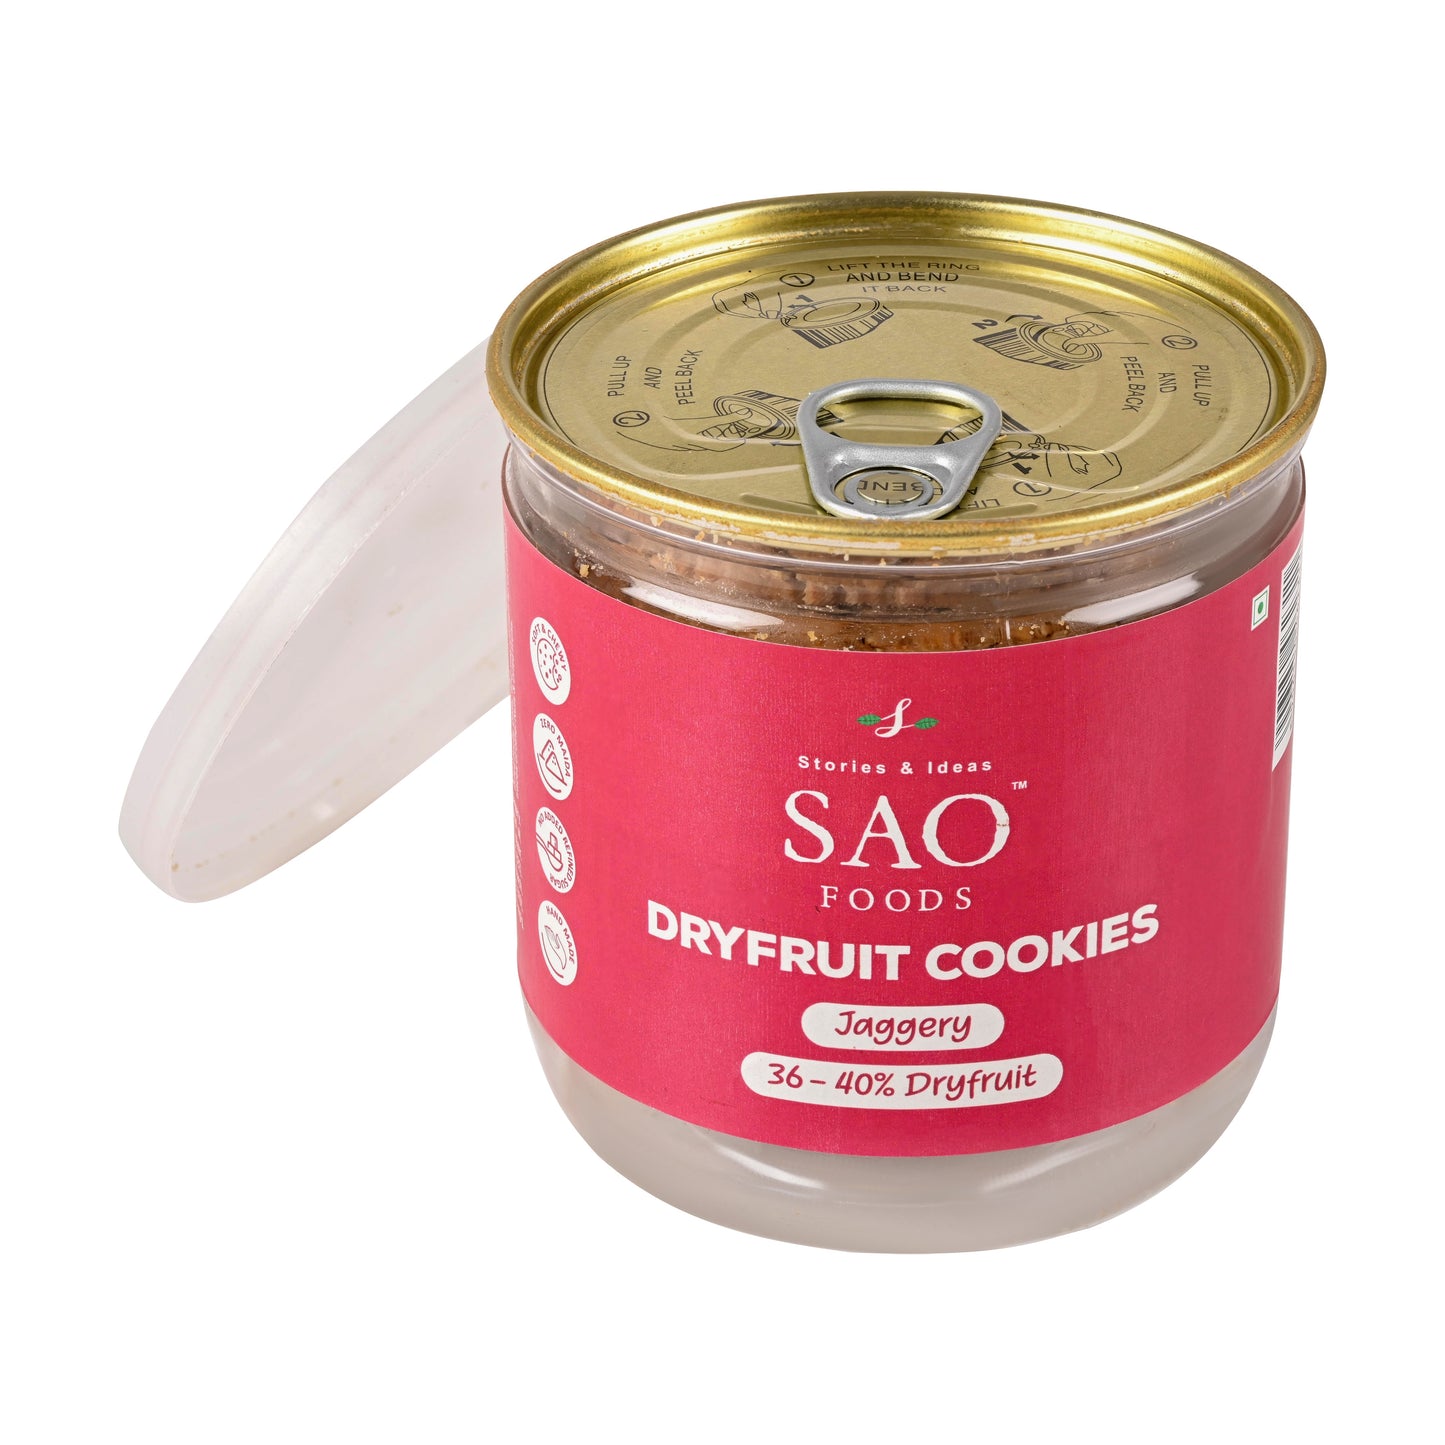 SAO FOODS Dryfruit Cookies 180 gm with Jaggery & 36-40% Dryfruit | Handmade | Zero Maida | No Sugar